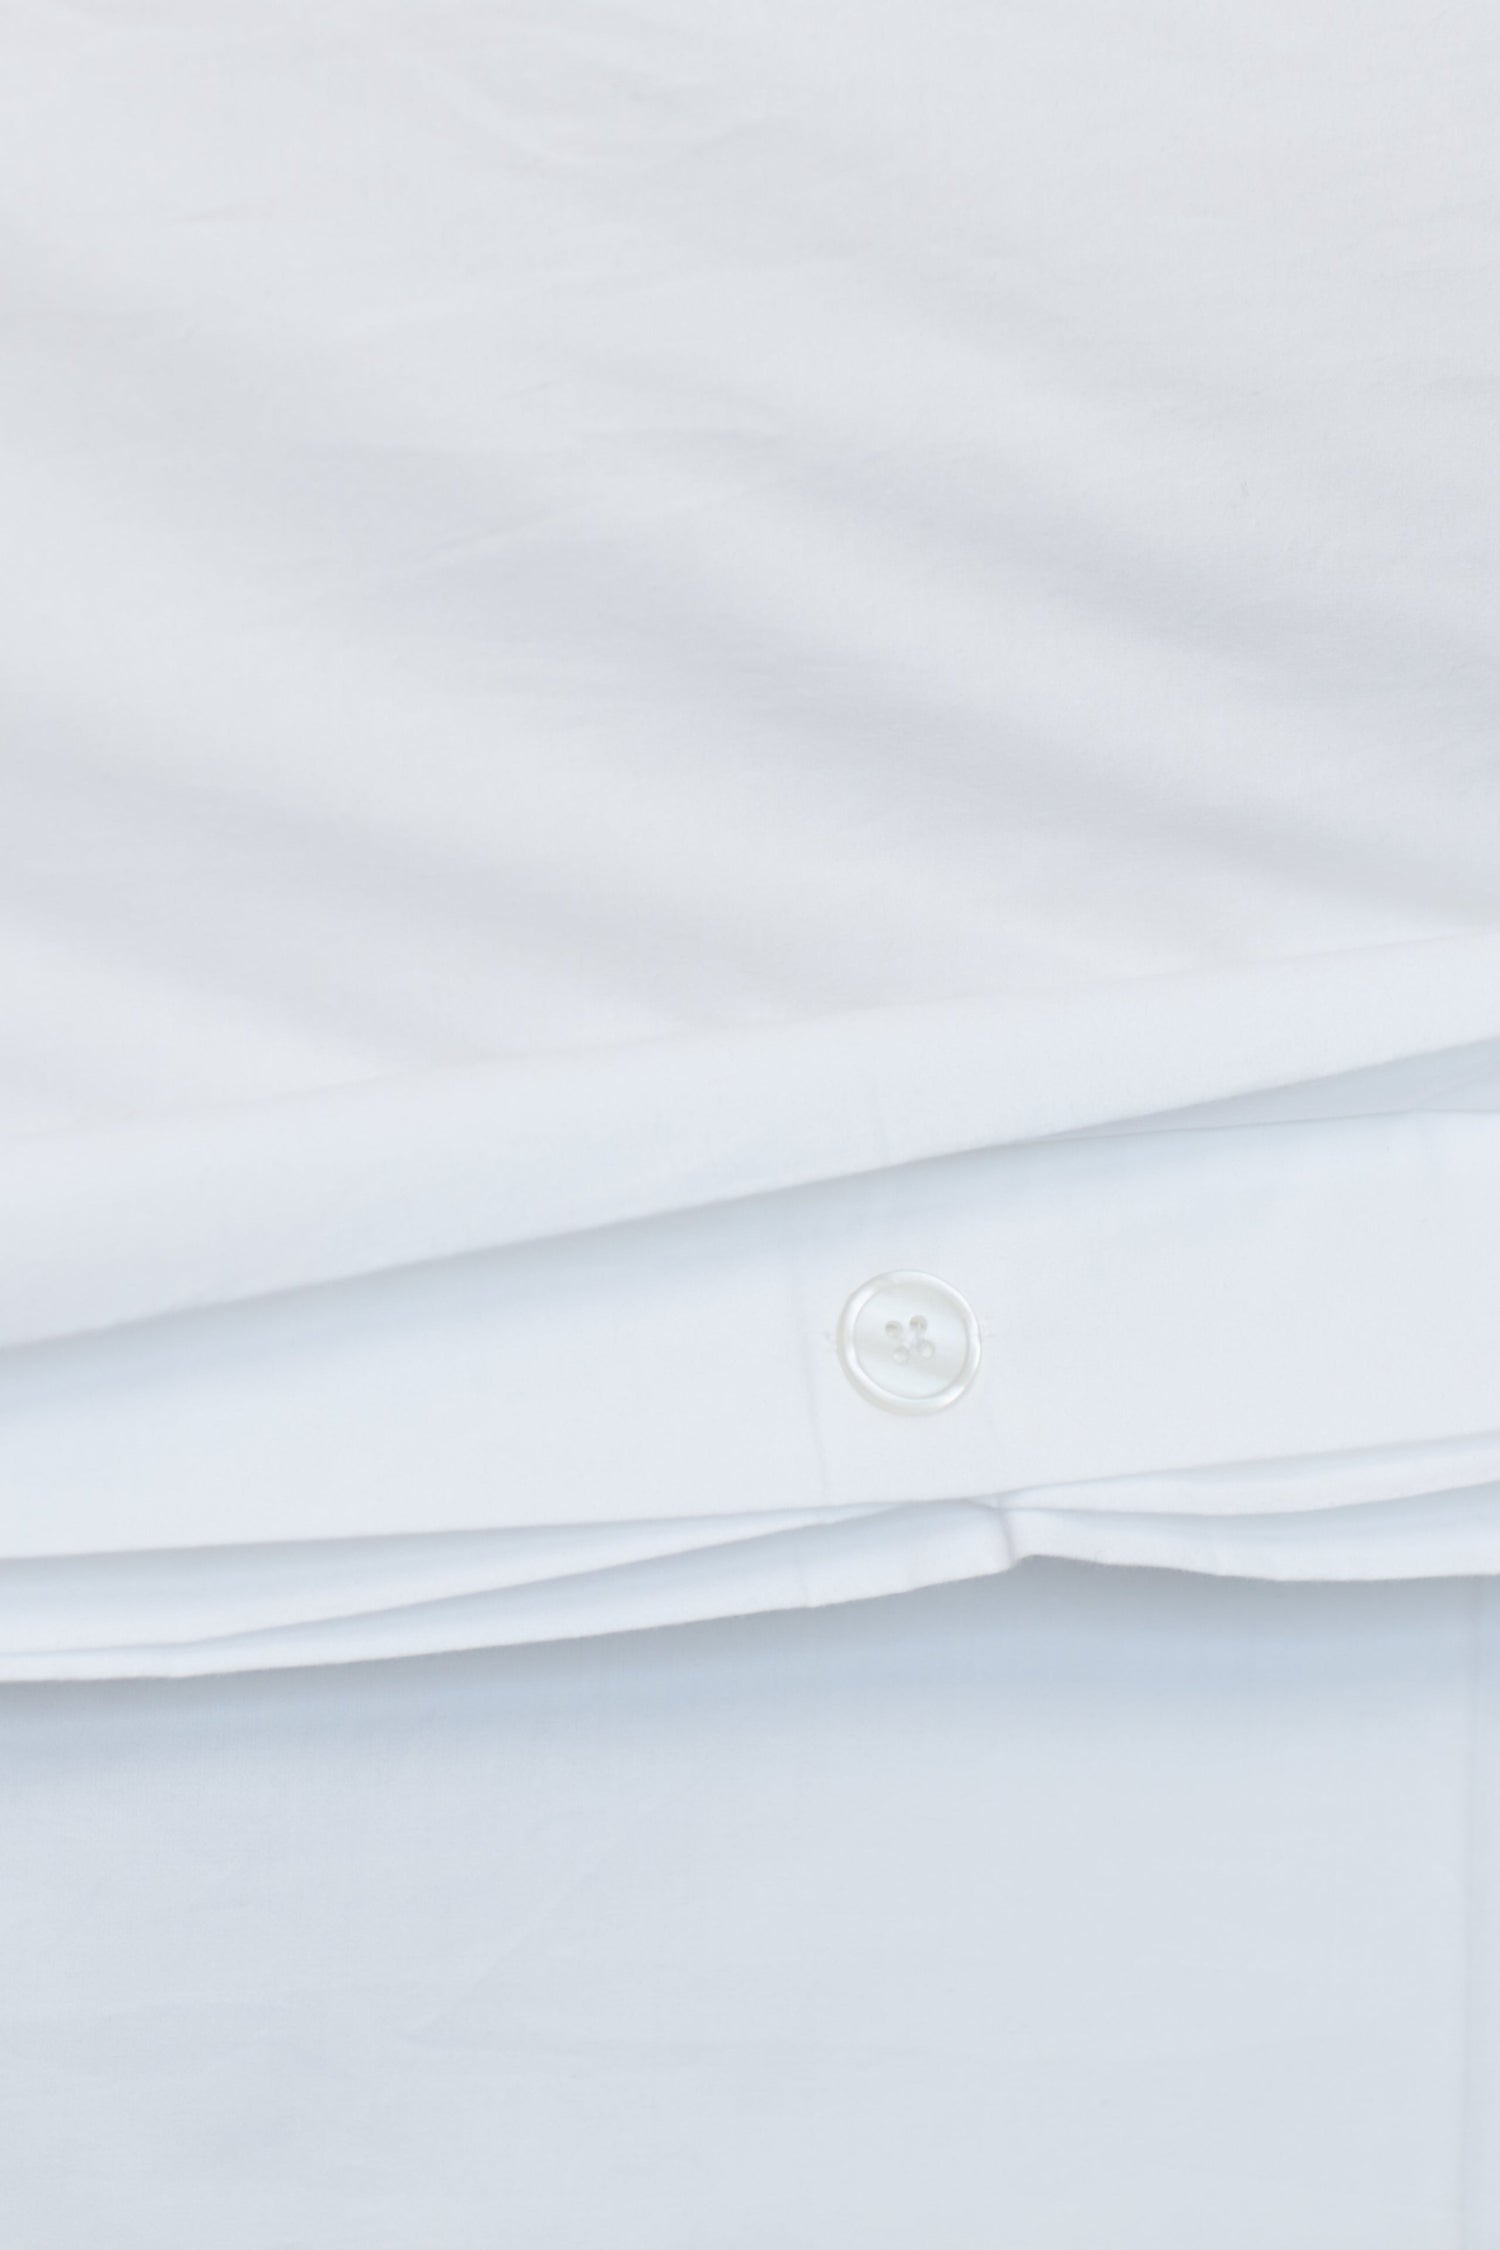 Navy Banded Duvet Cover + White Sheet Bundle | 100% Organic Certified Cotton